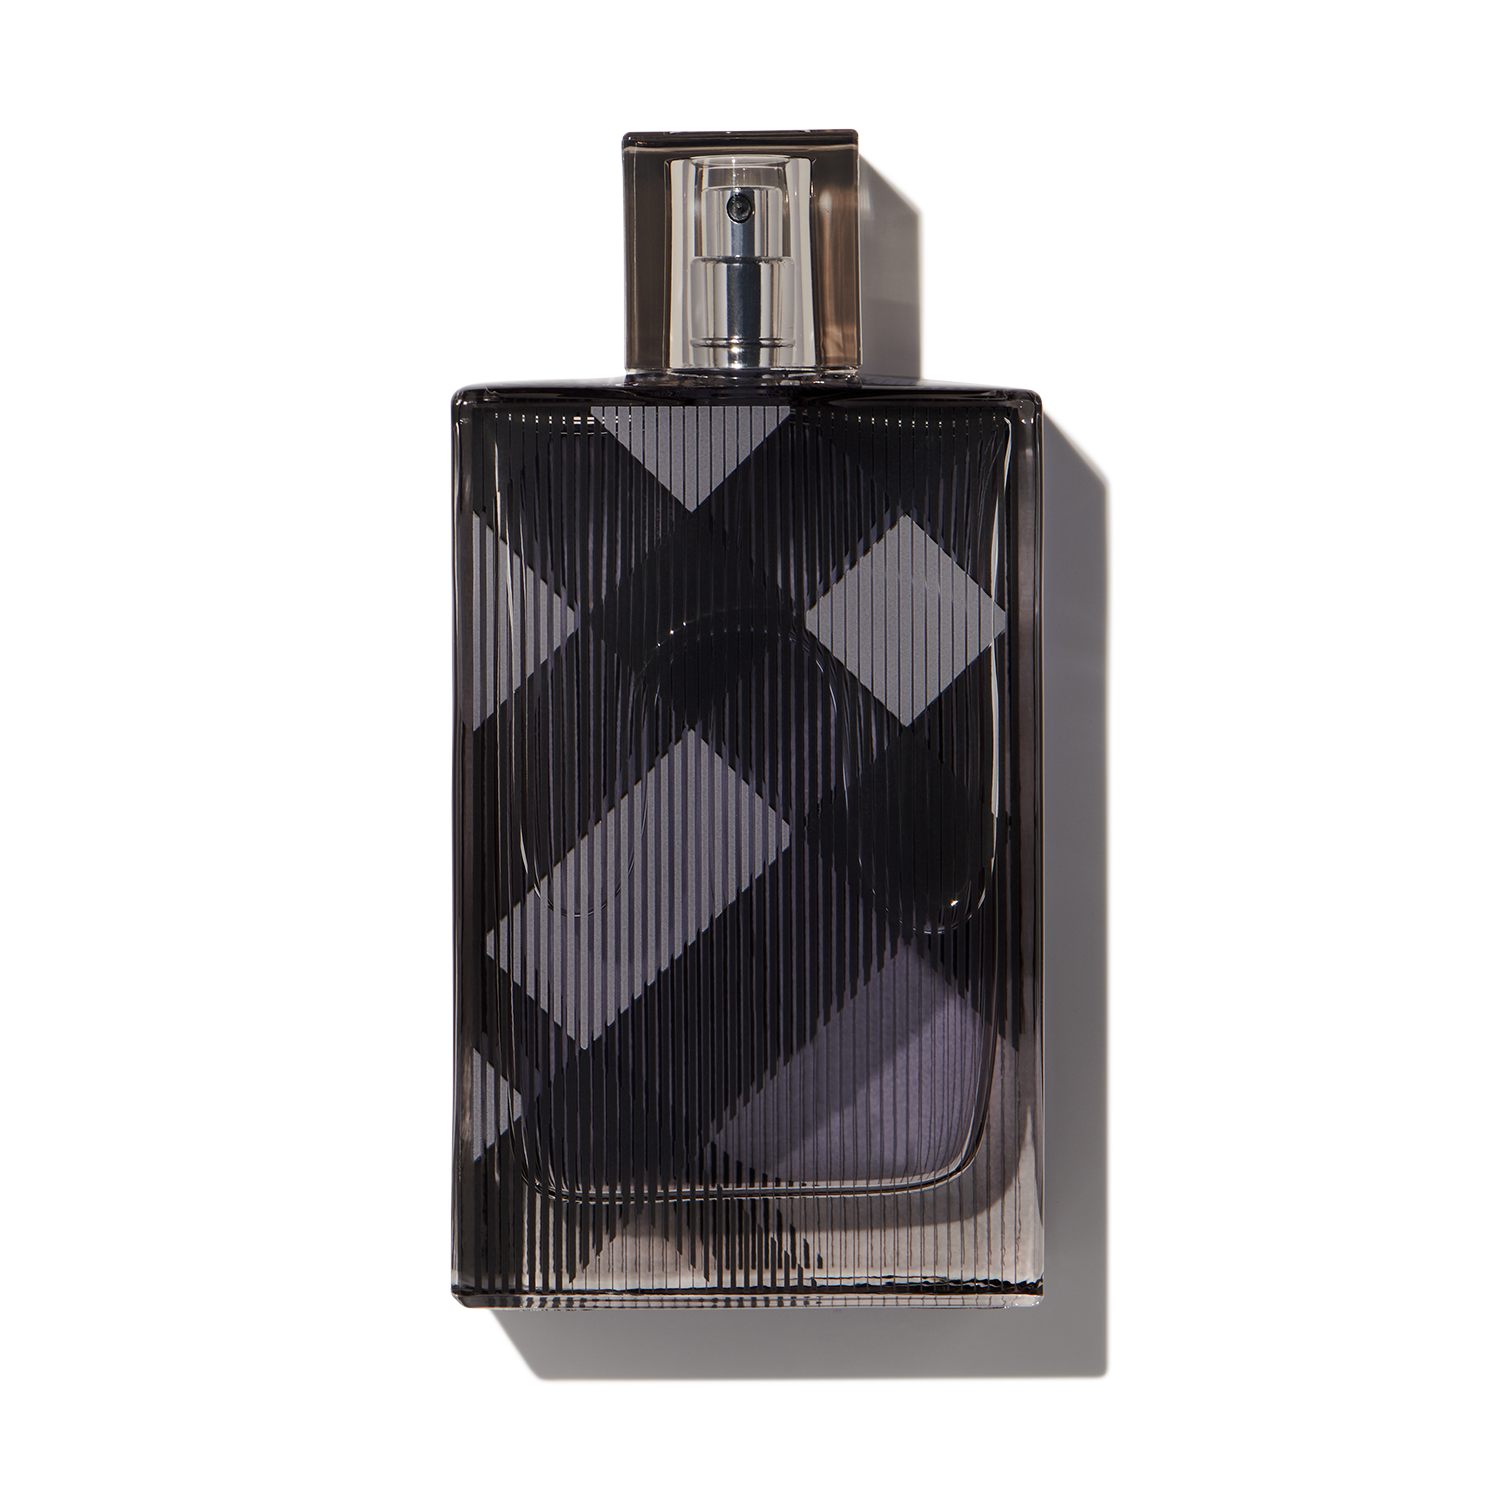 Actualizar 84+ imagen burberry mens fragrances - Abzlocal.mx